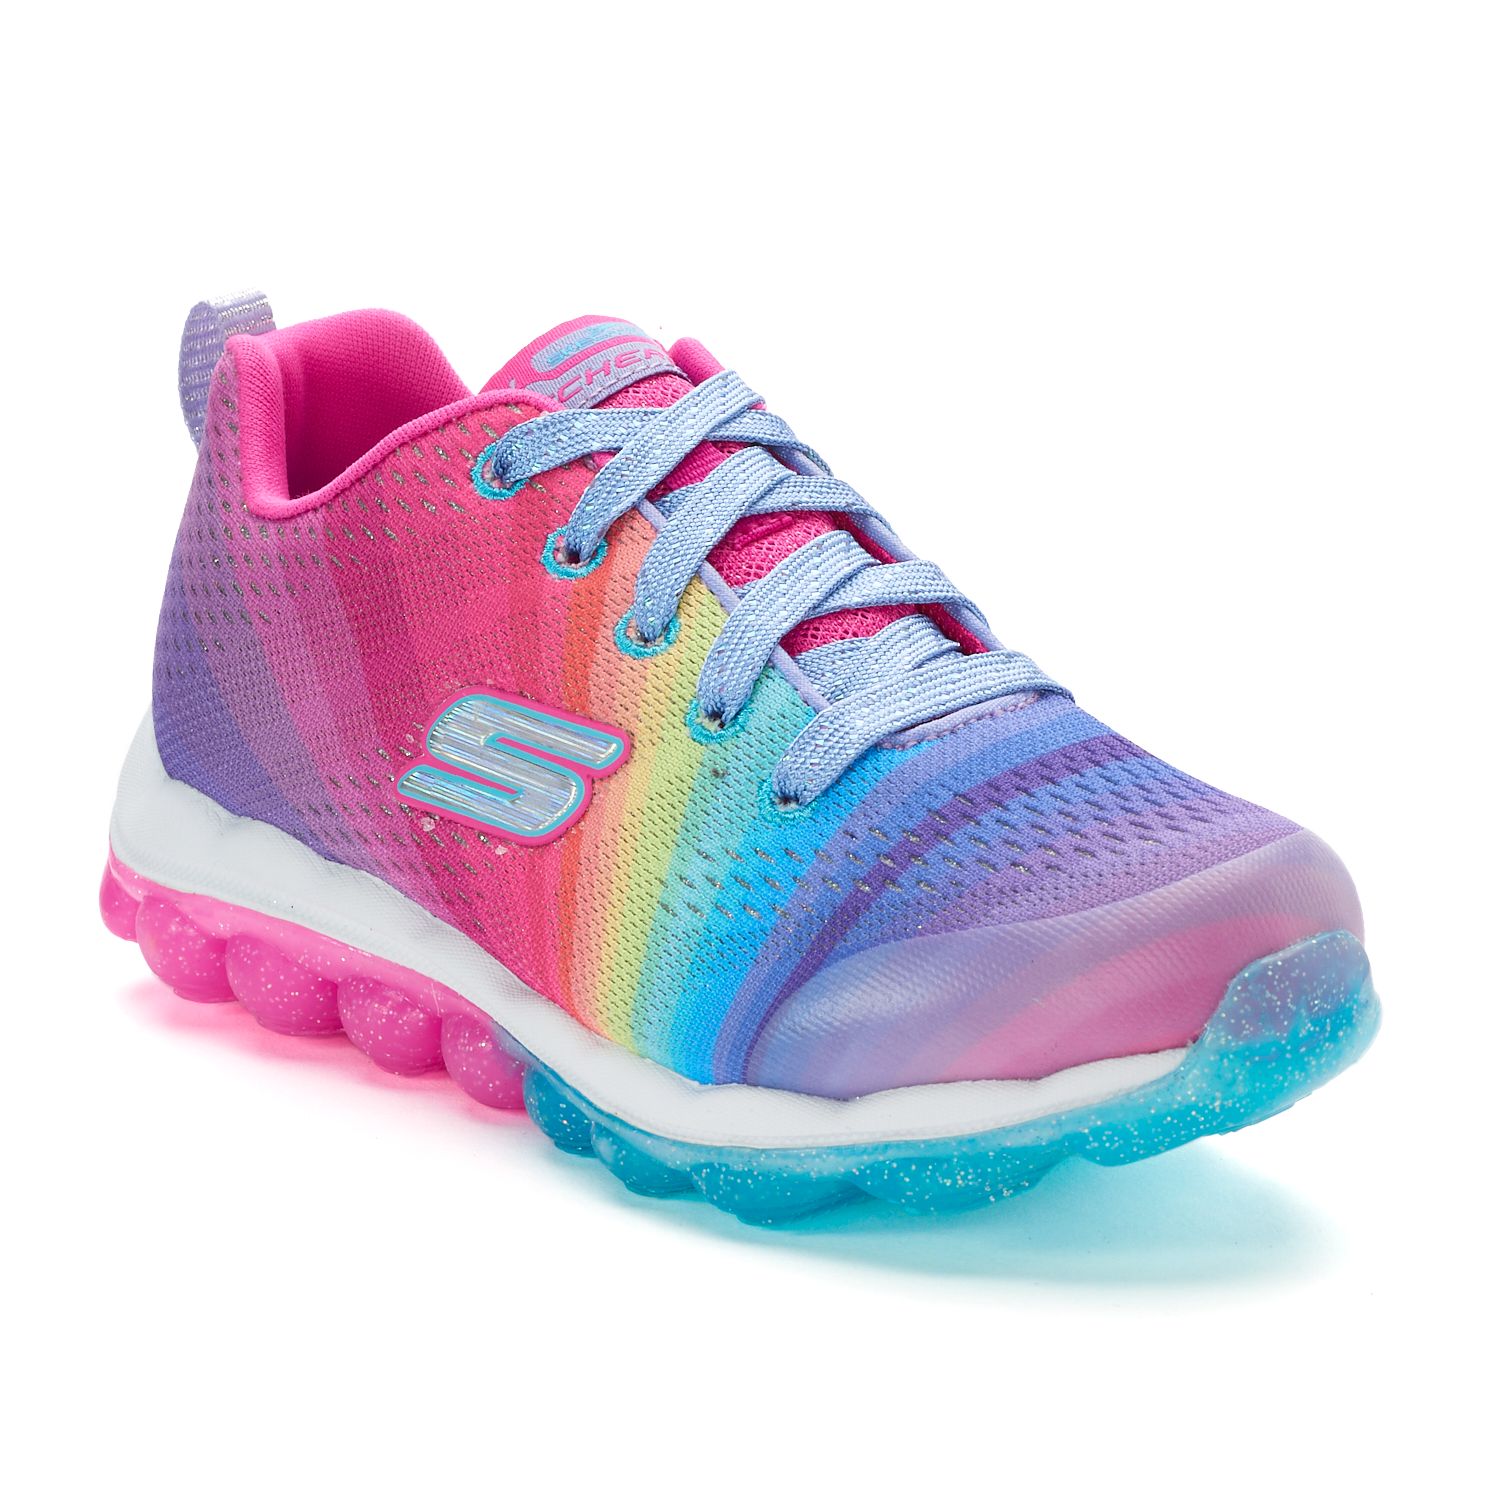 rainbow skechers shoes